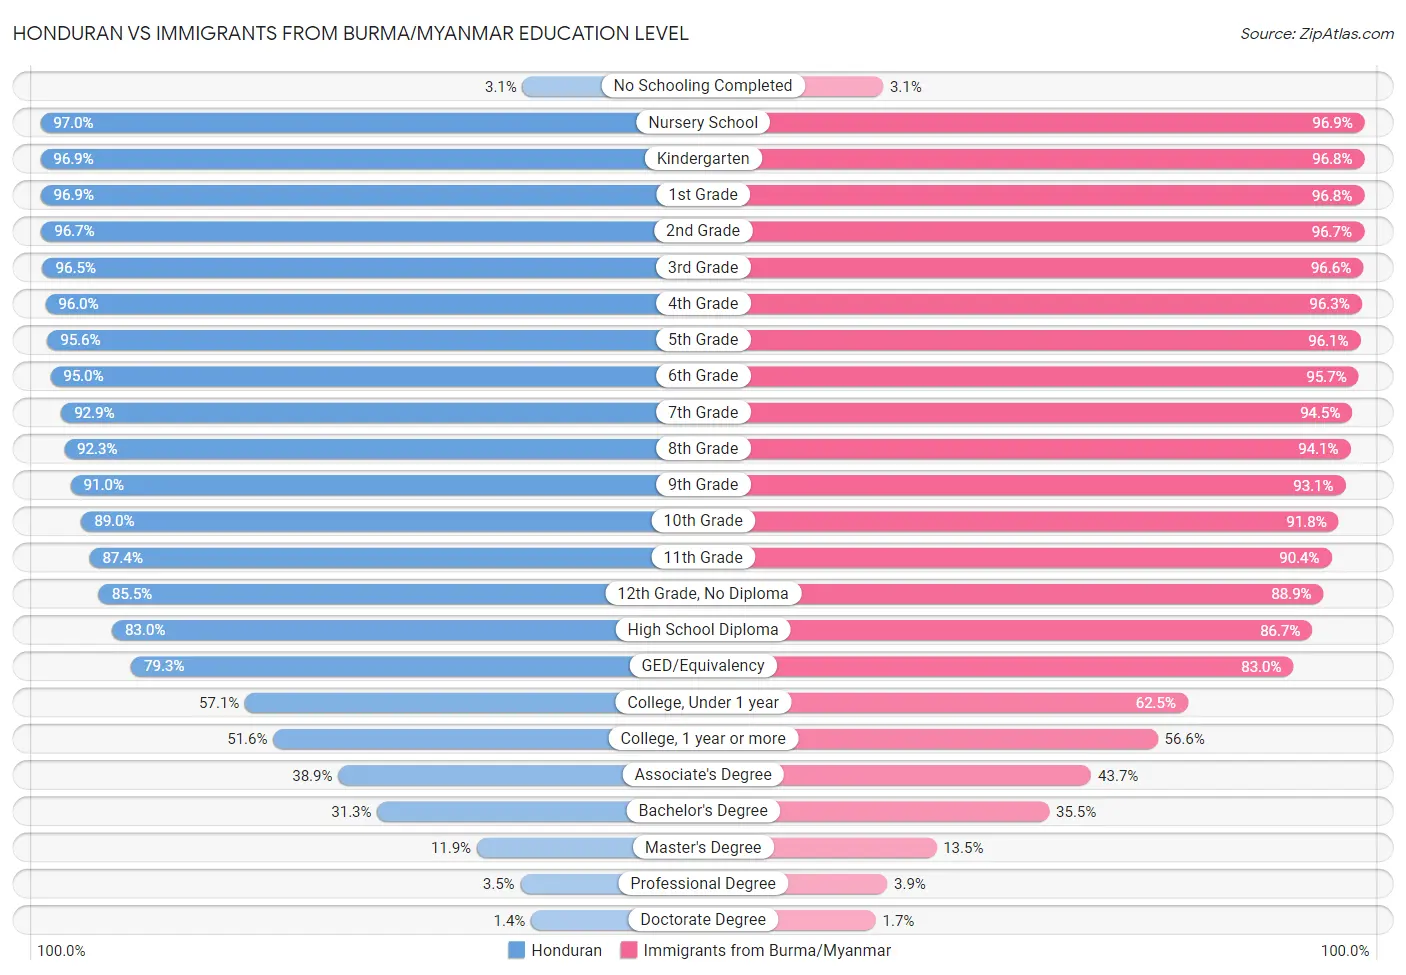 Honduran vs Immigrants from Burma/Myanmar Education Level